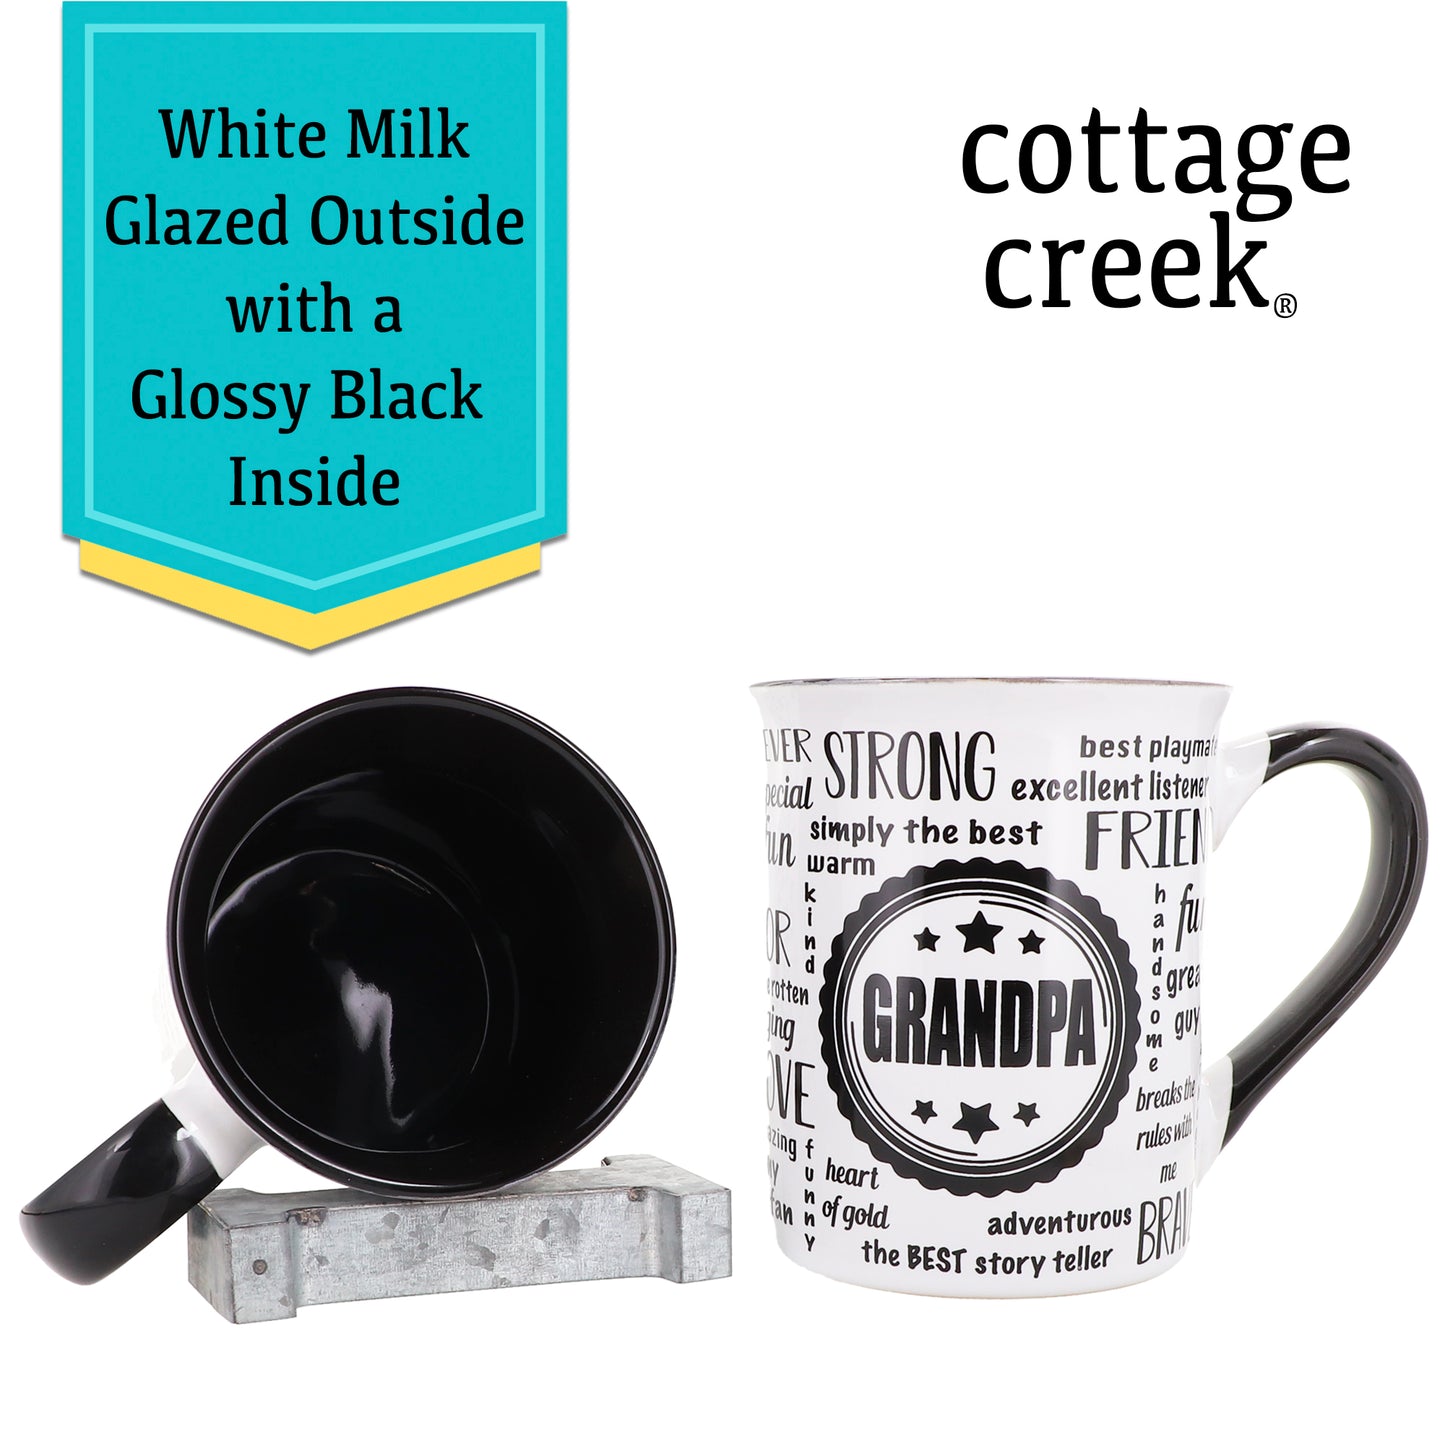 Cottage Creek Coffee Mug Set, Grandma and Grandpa Coffee Mug Set, Large Ceramic 16oz Set of Two Mugs with Black Handle, Grandma Mug, Grandpa Mug